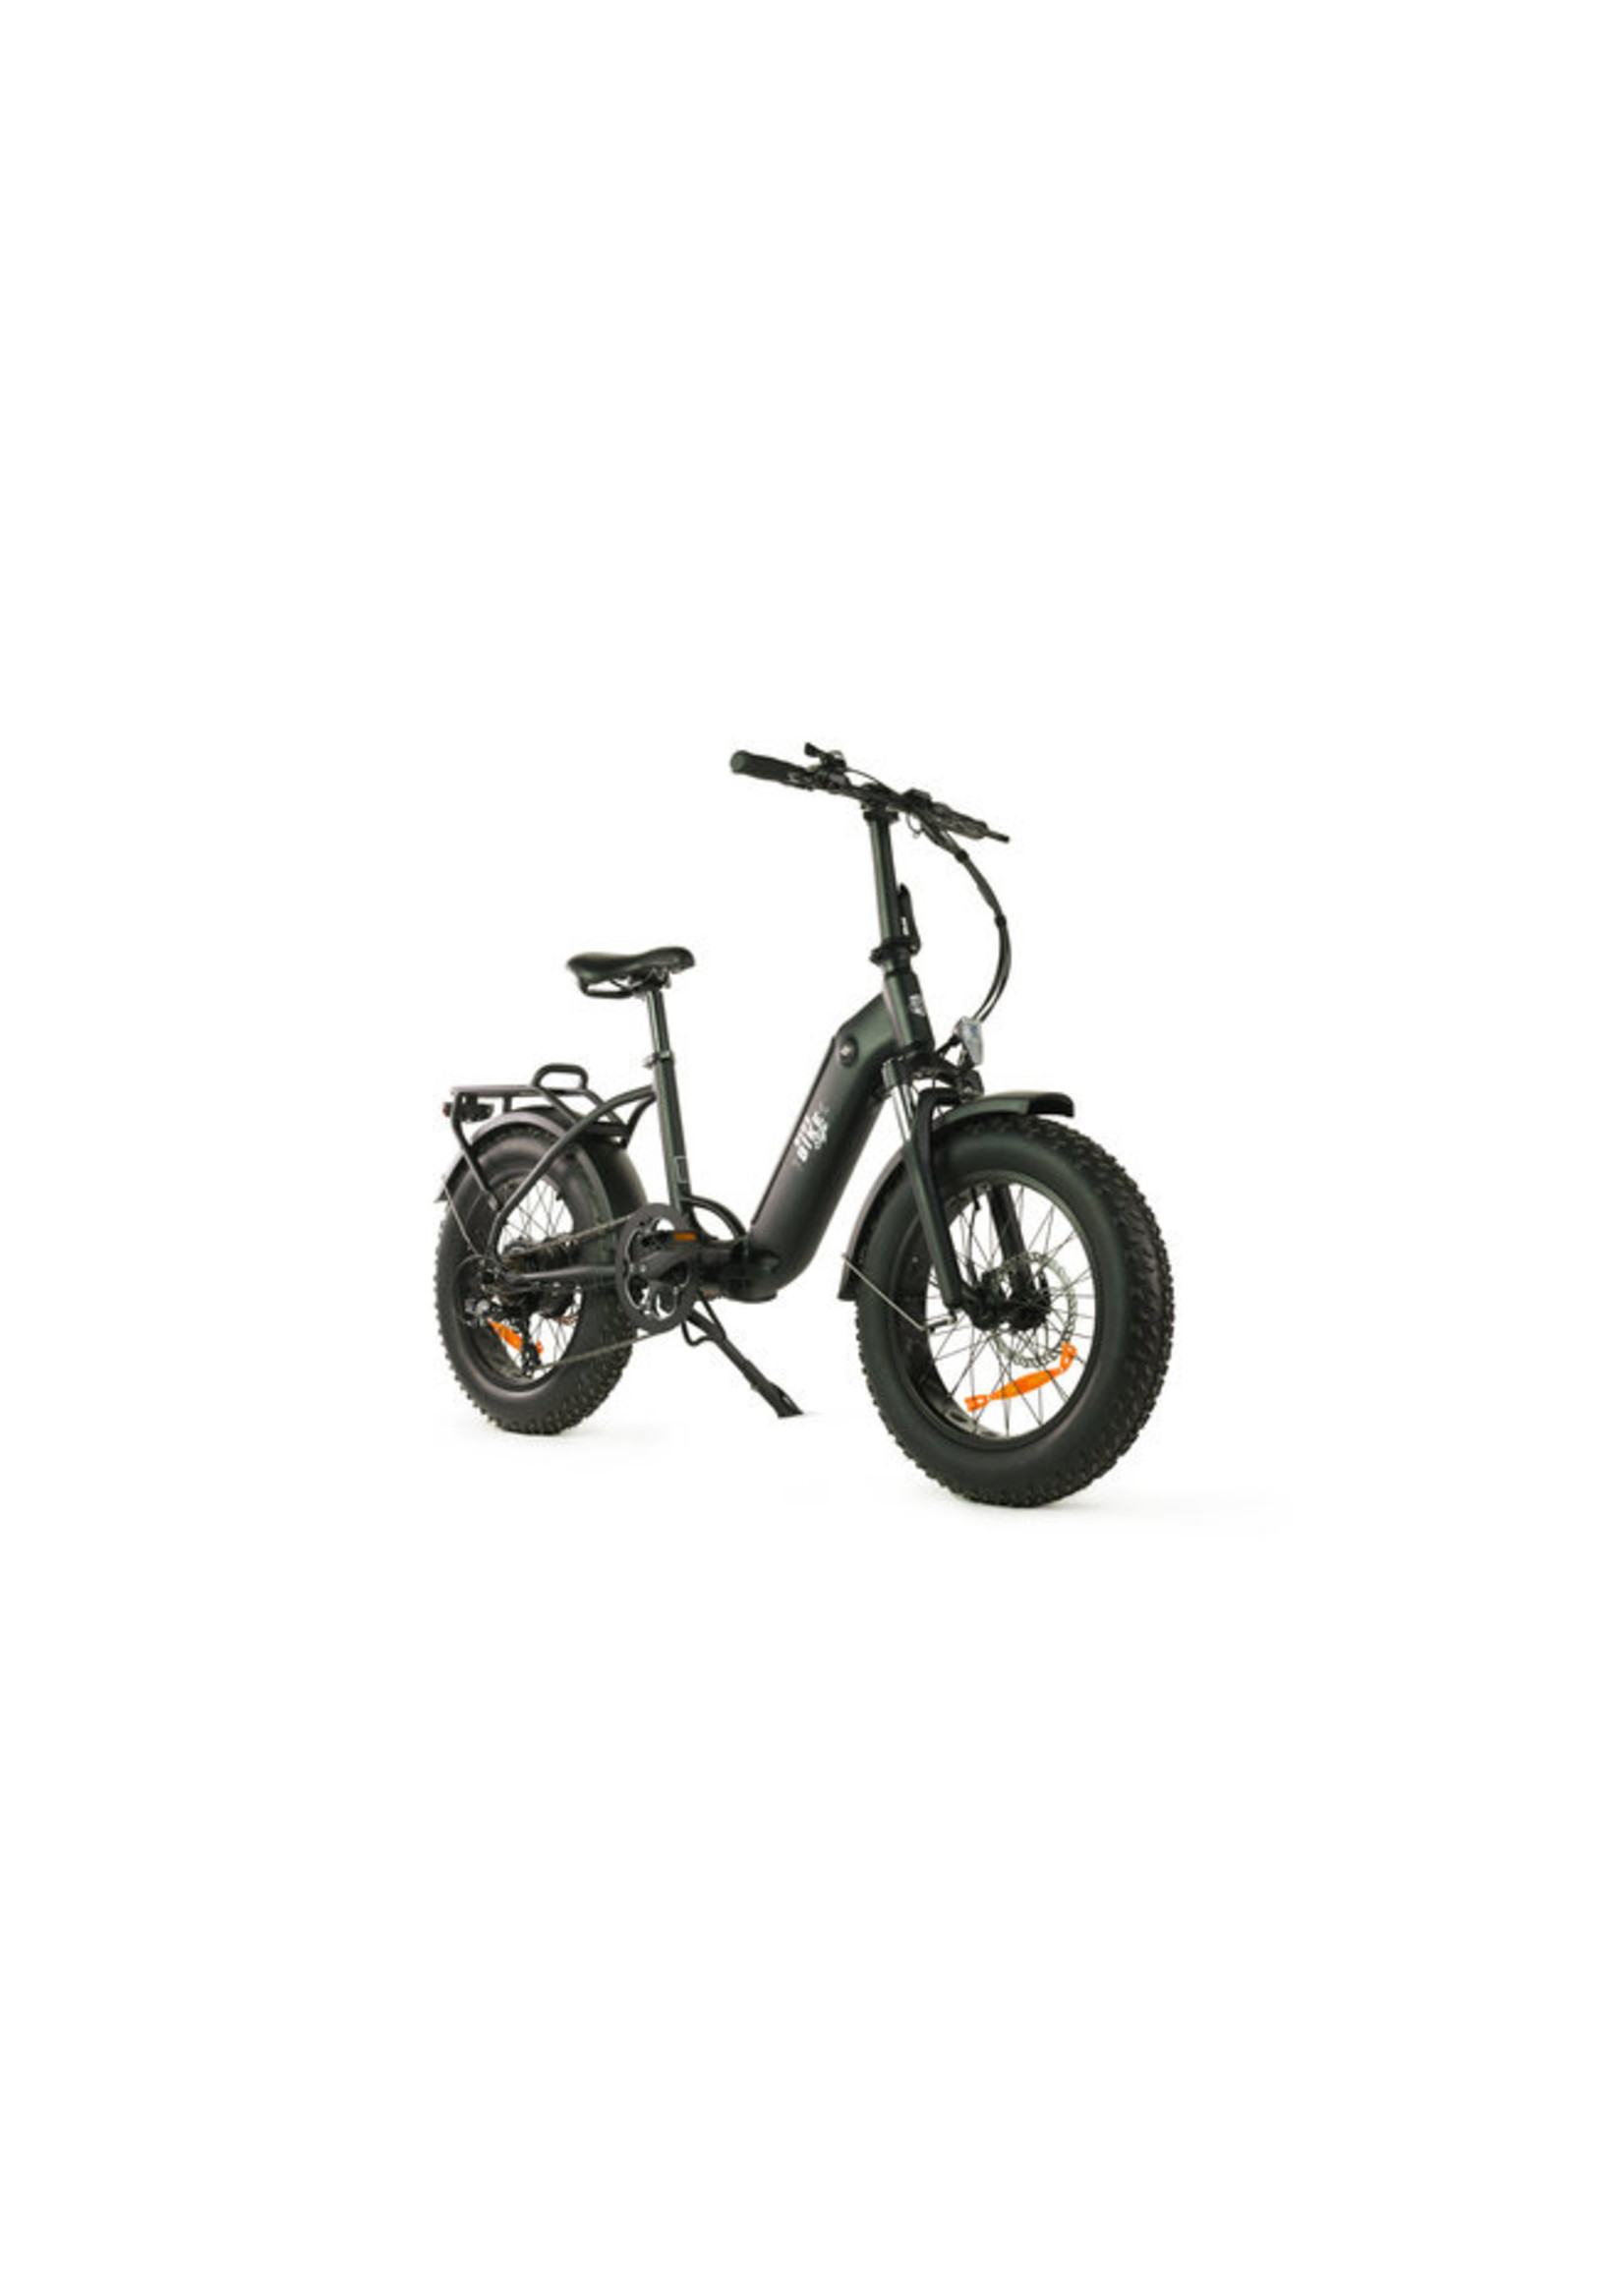 Ride bike Style FAT PLIABLE 2020 500W 48V 14AH TORQUE SENSOR